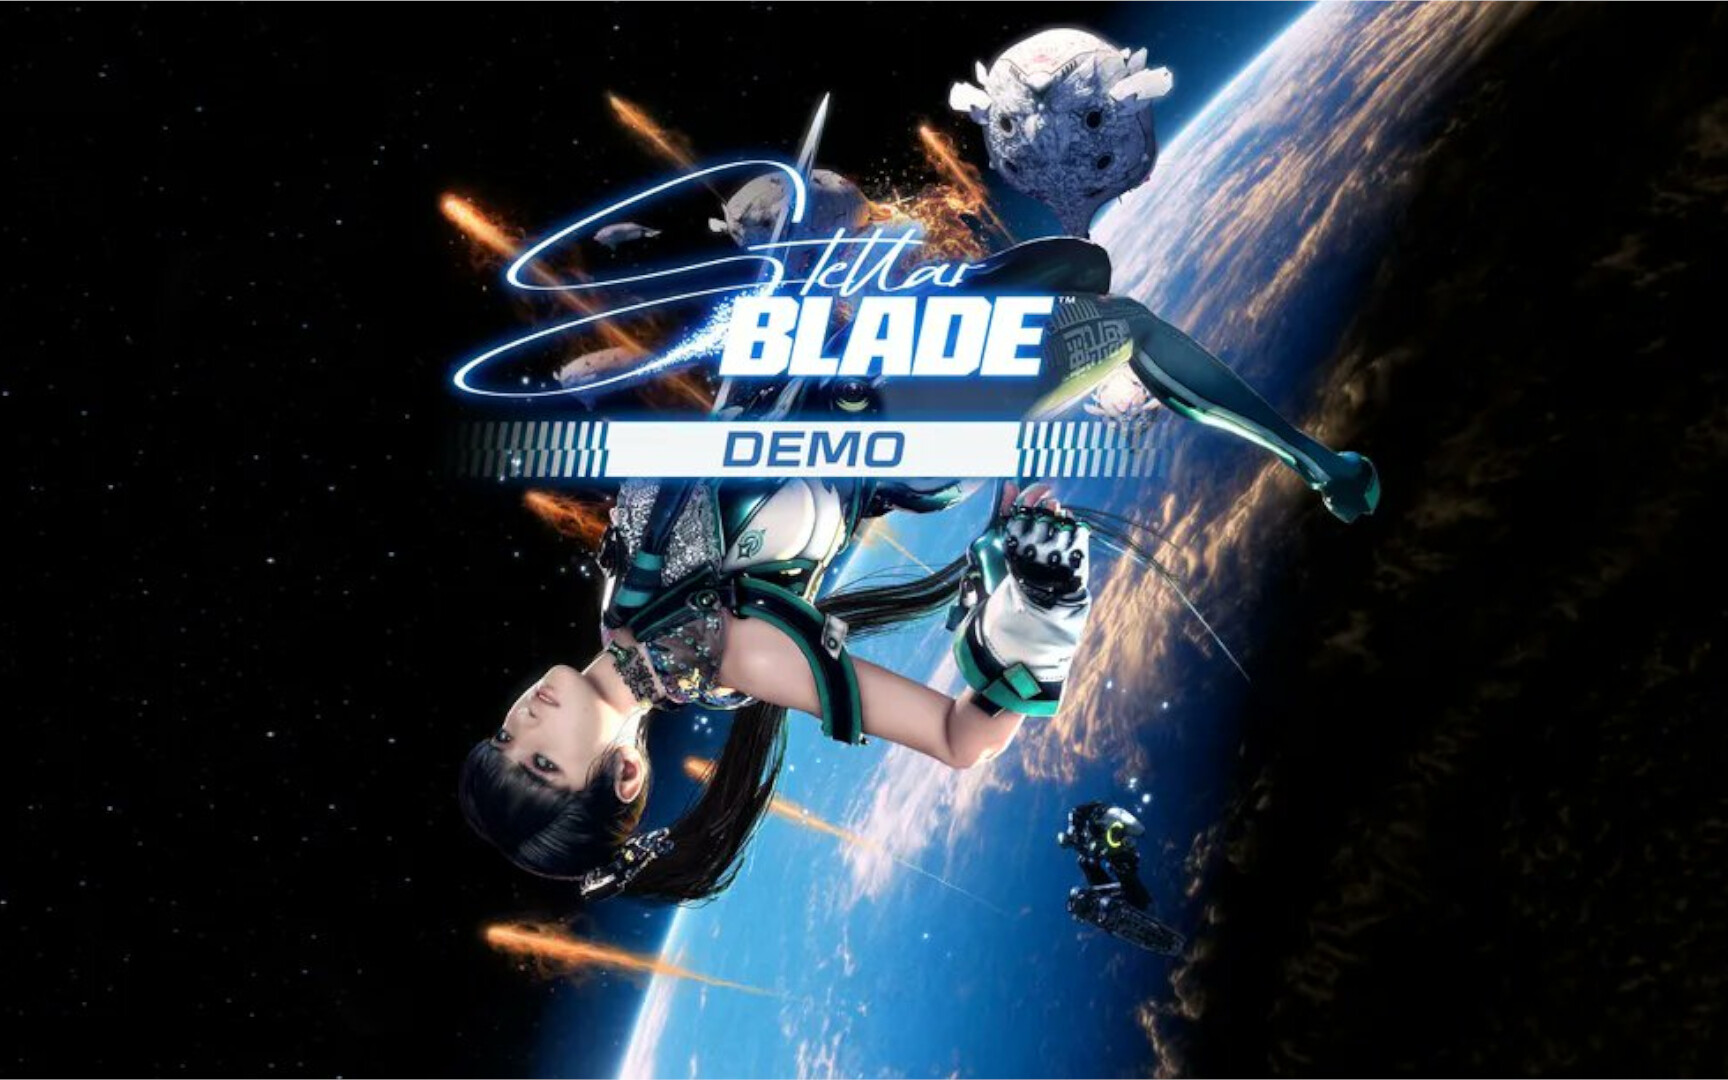 Stellar Blade Demo key art